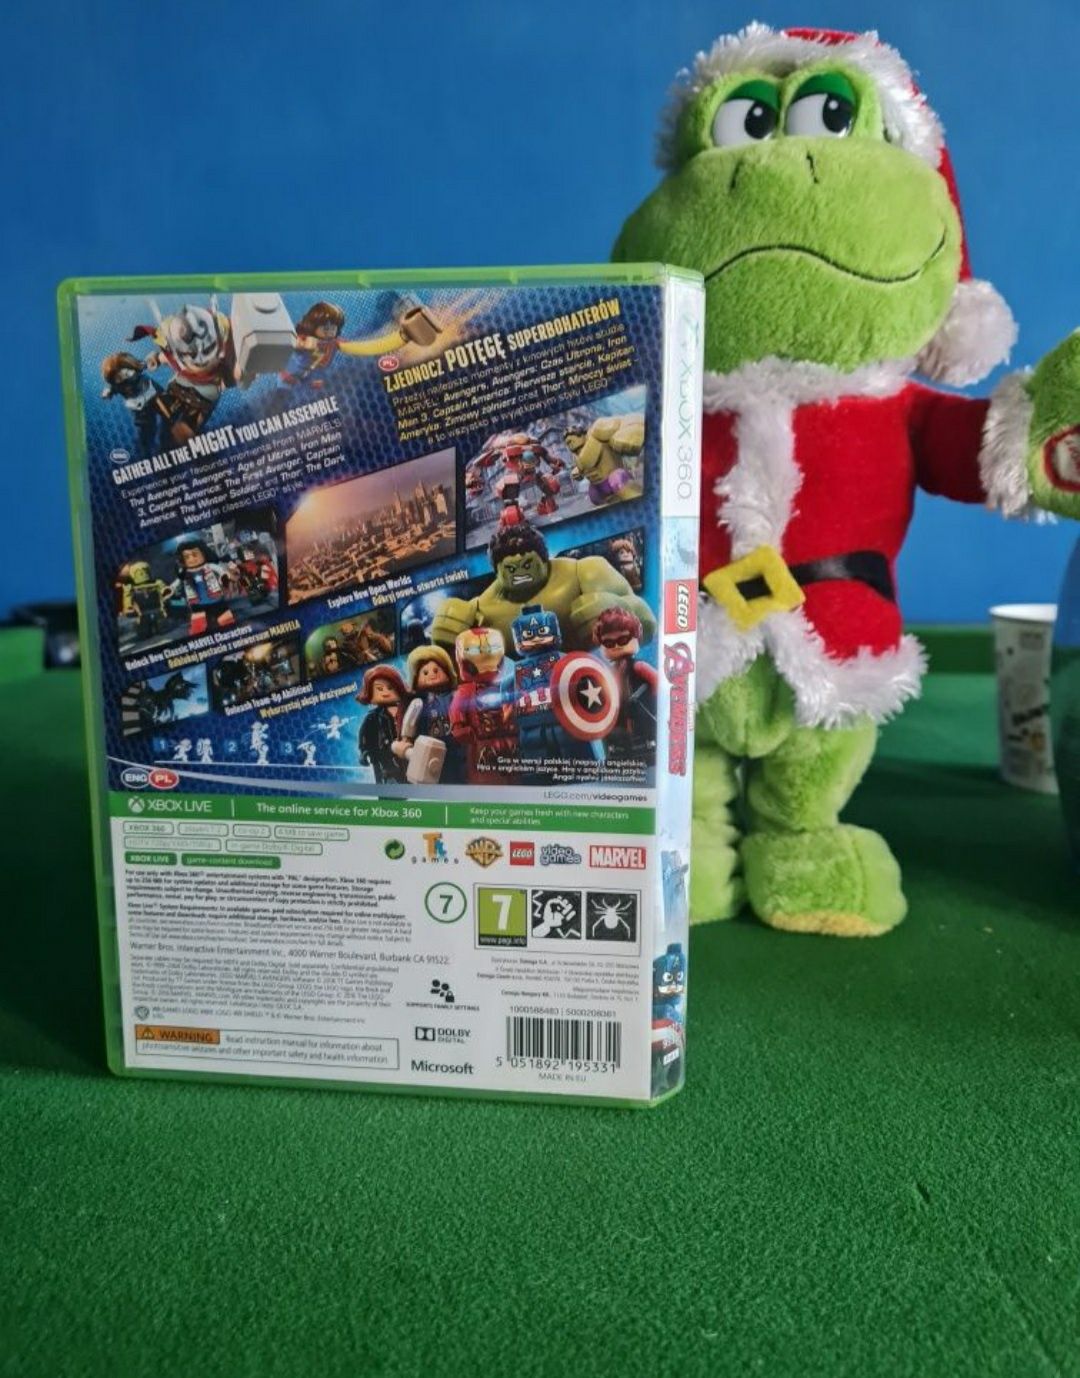 Lego Avengers po polsku Xbox 360 marvel Iron Man Hulk kapitan ameryka